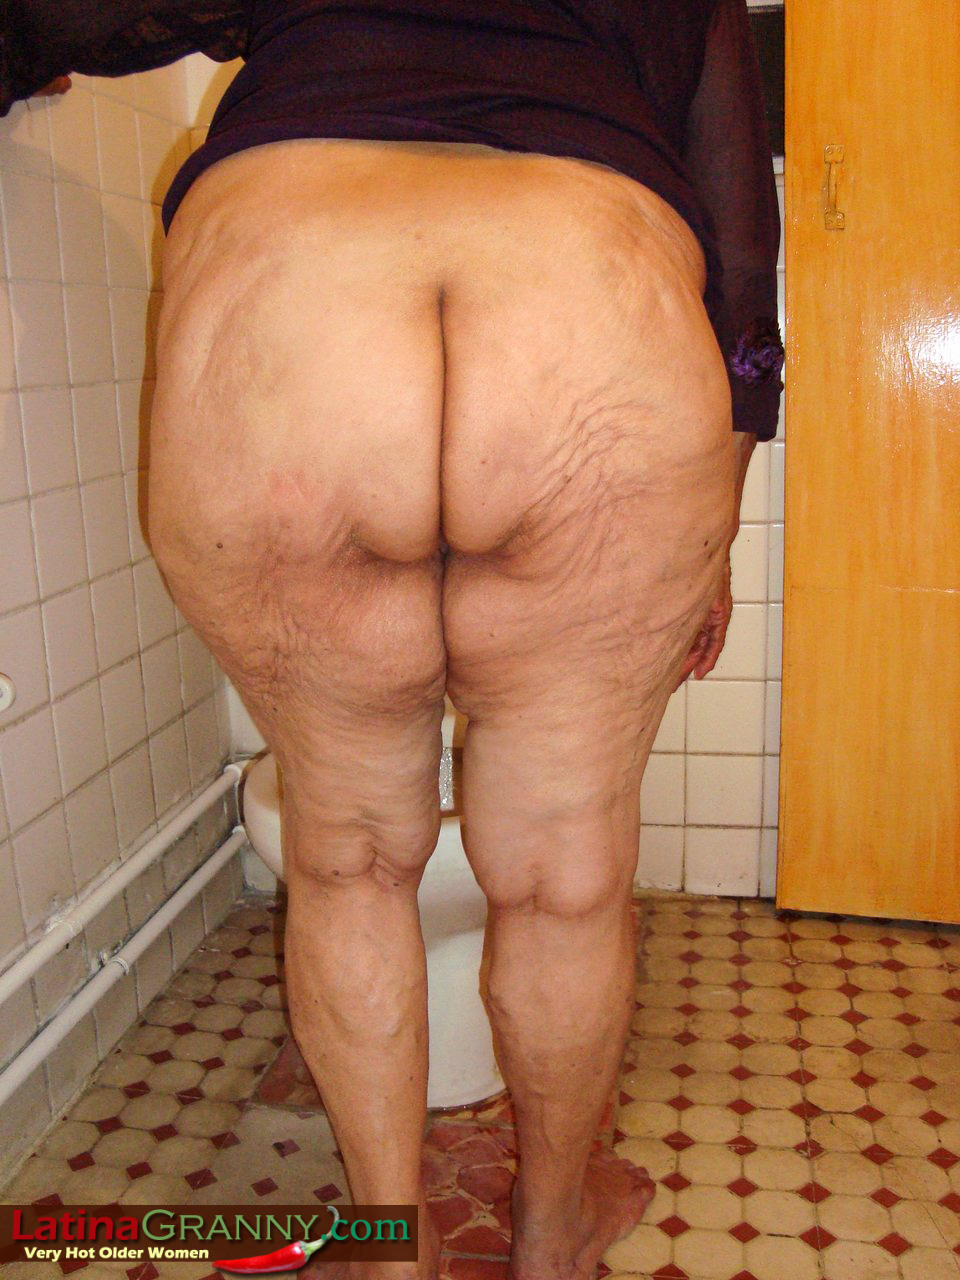 Granny Pics Daily Free Gallery Granny Show Body On Toilet